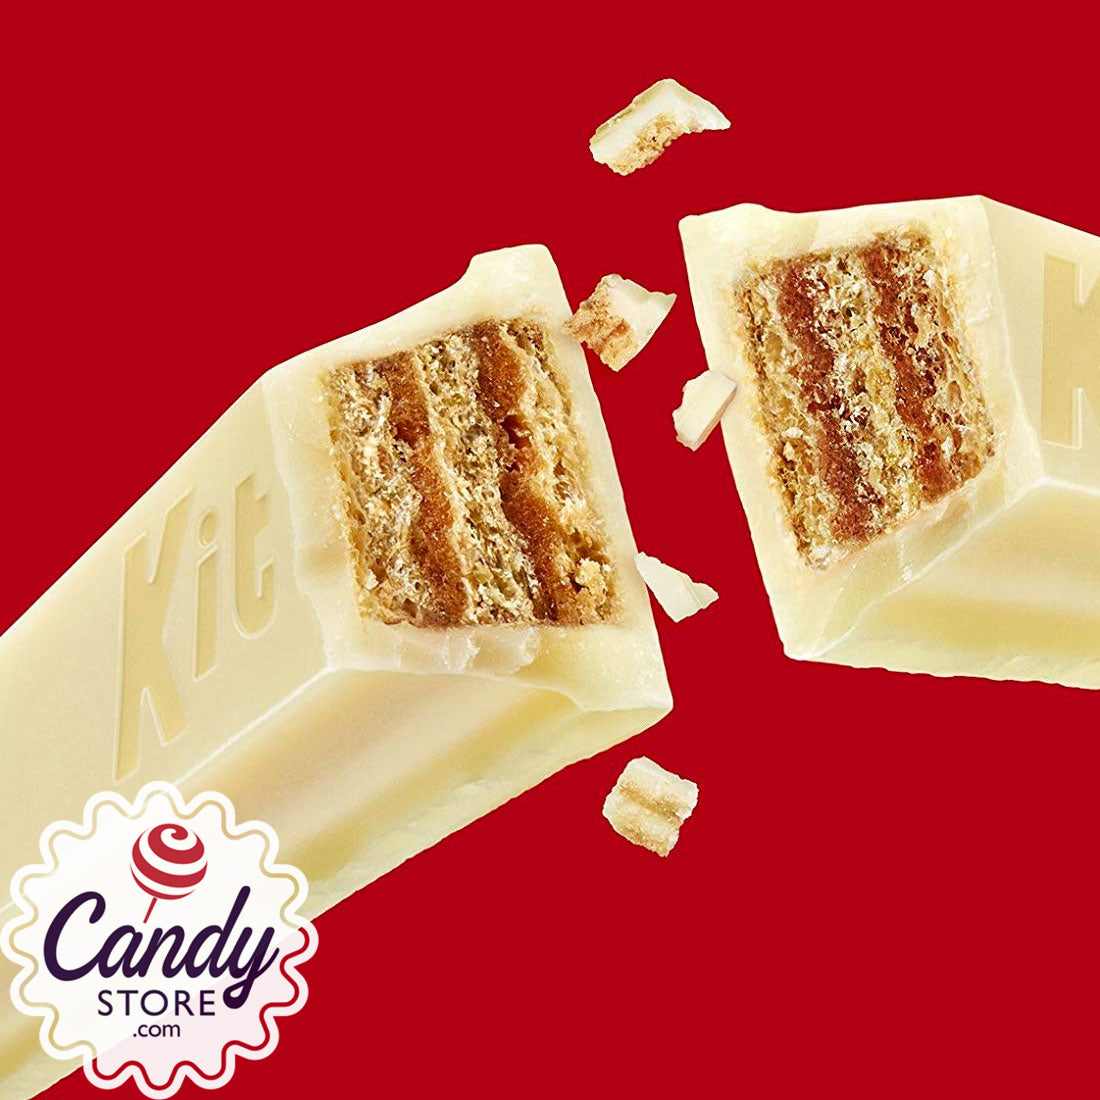 White Chocolate Kit Kat Candy Bars: 24-Piece Box